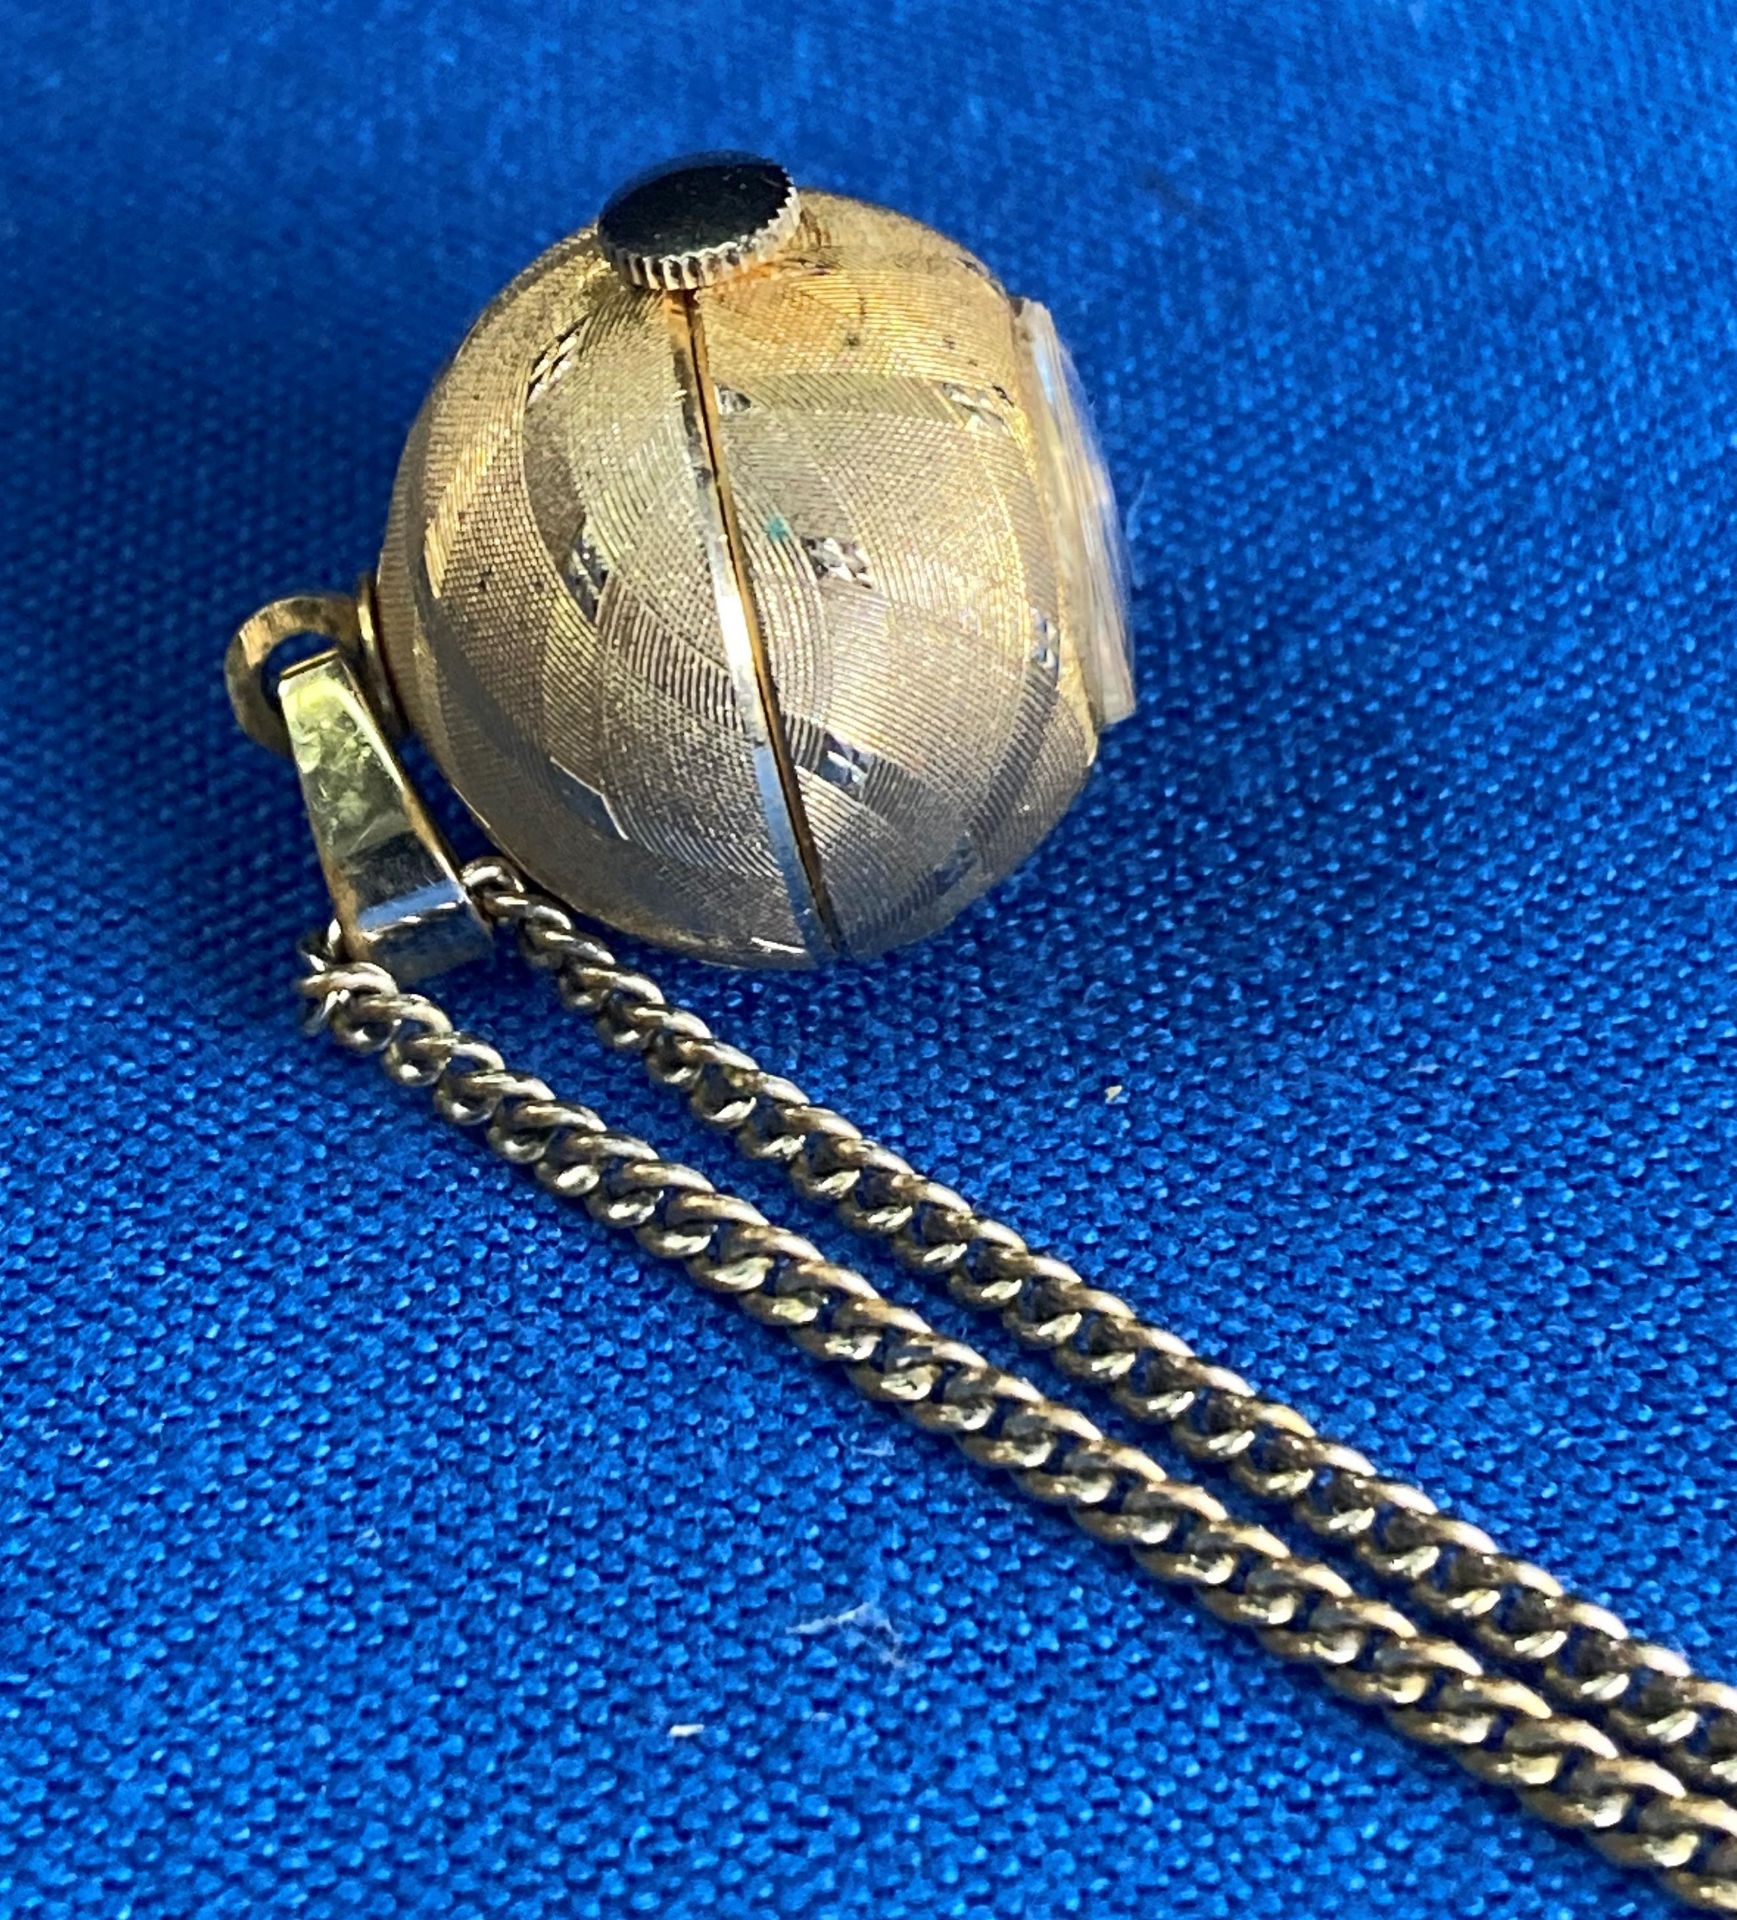 A vintage BULER pendant watch in original case (saleroom location: S3 GC3) - Image 4 of 4